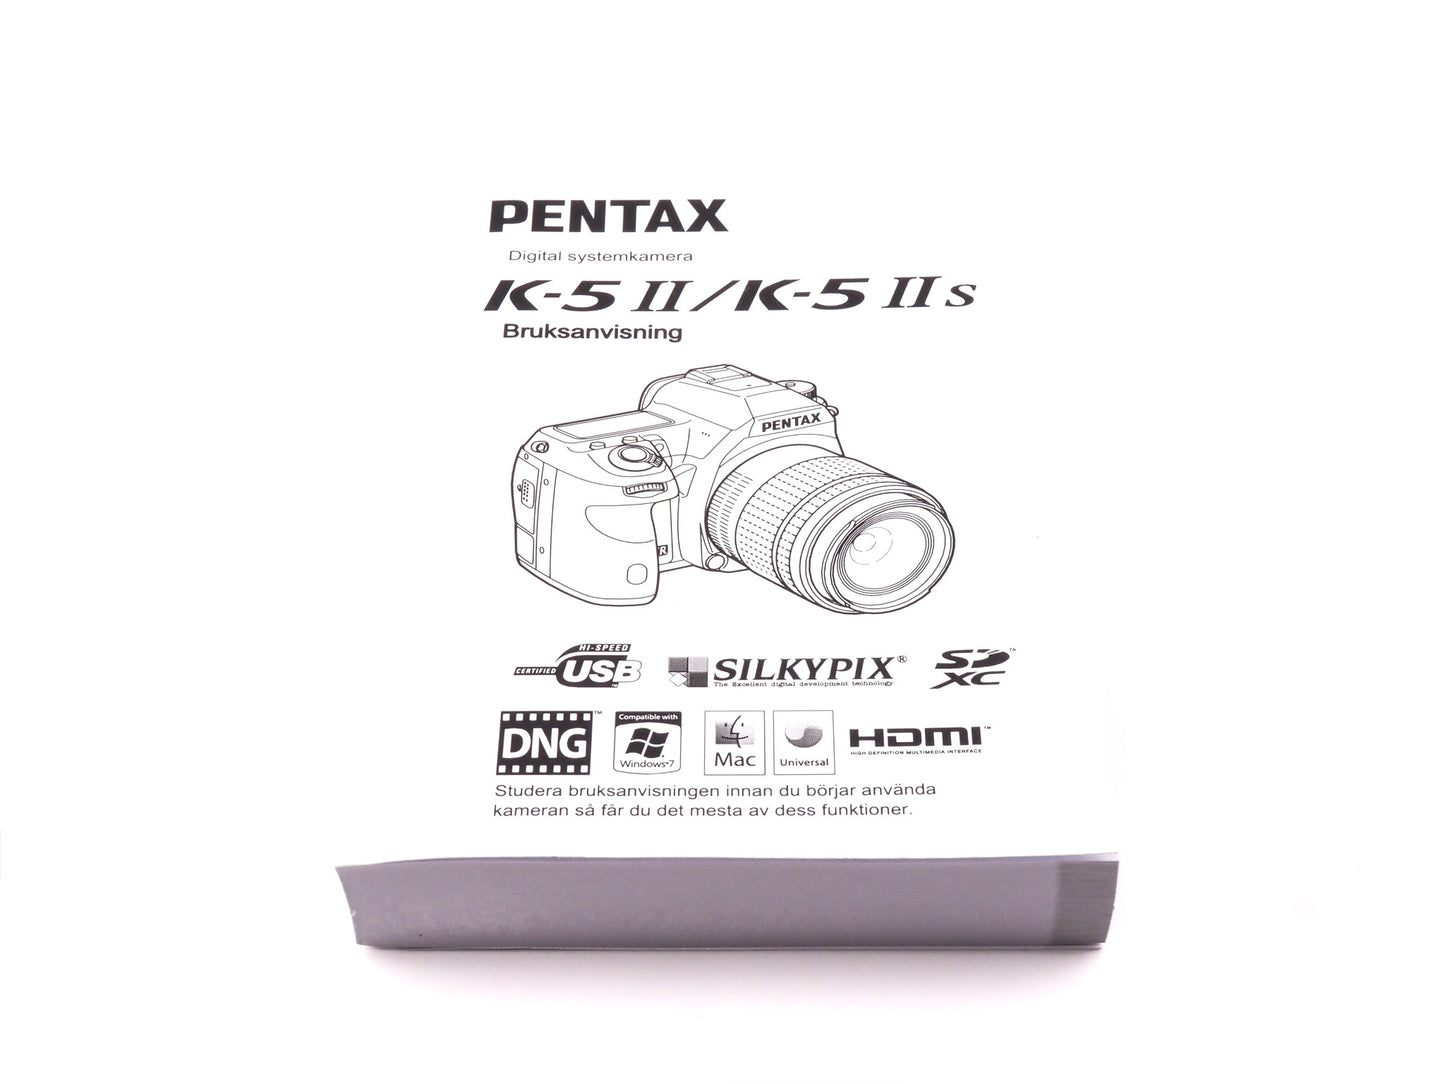 Pentax K-5 II/K-5 IIs Instruction Manual